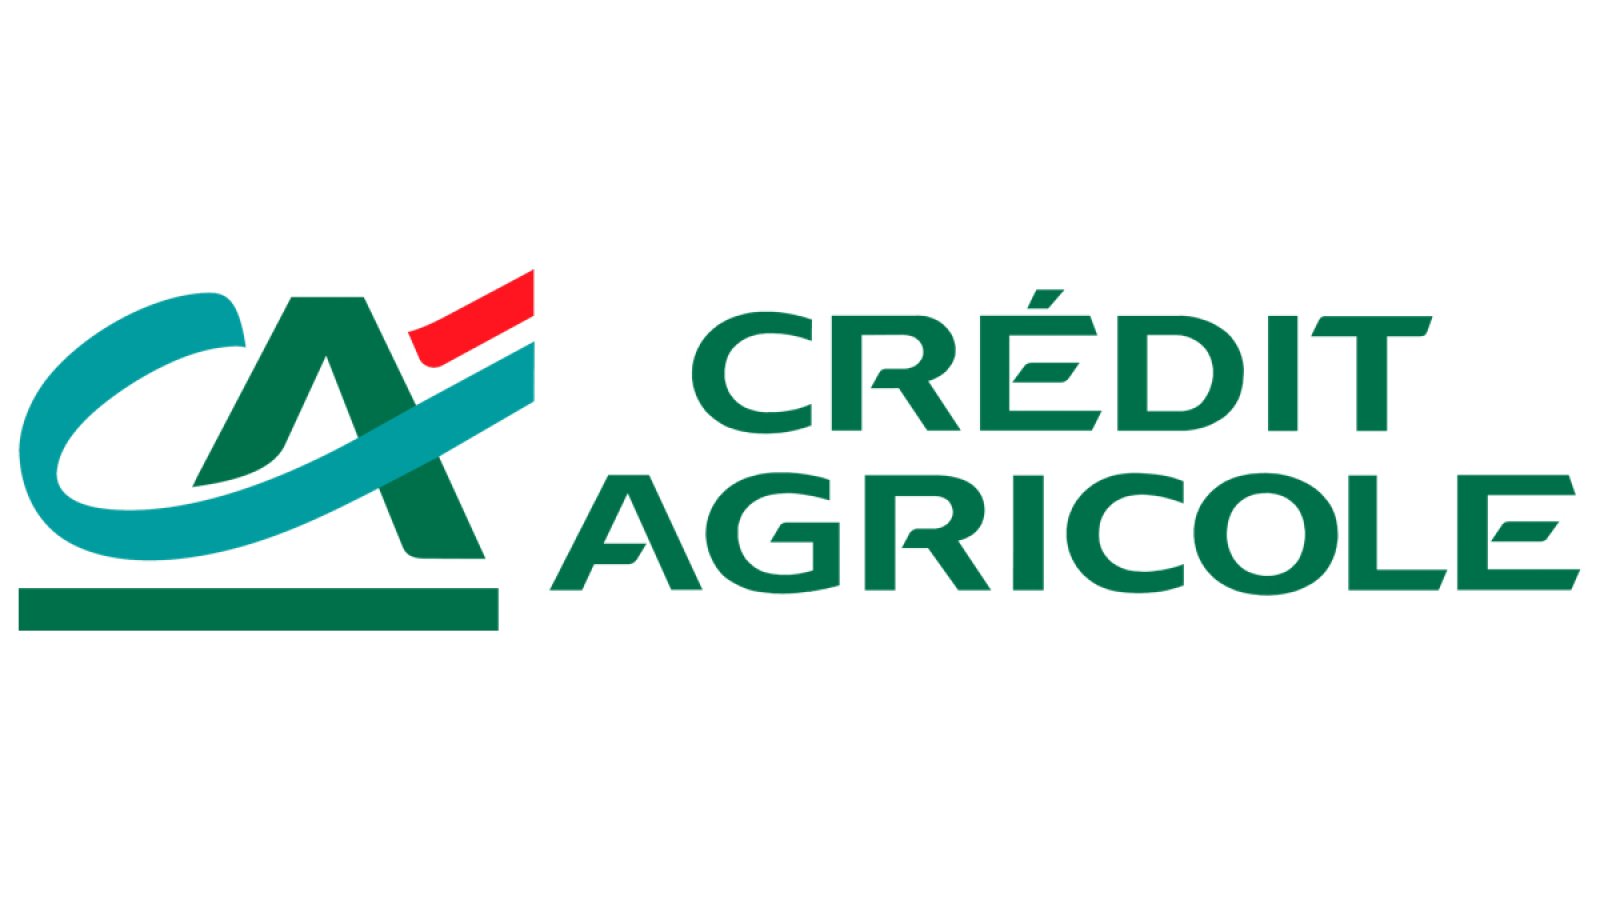 Logo Crédit Agricole Italia